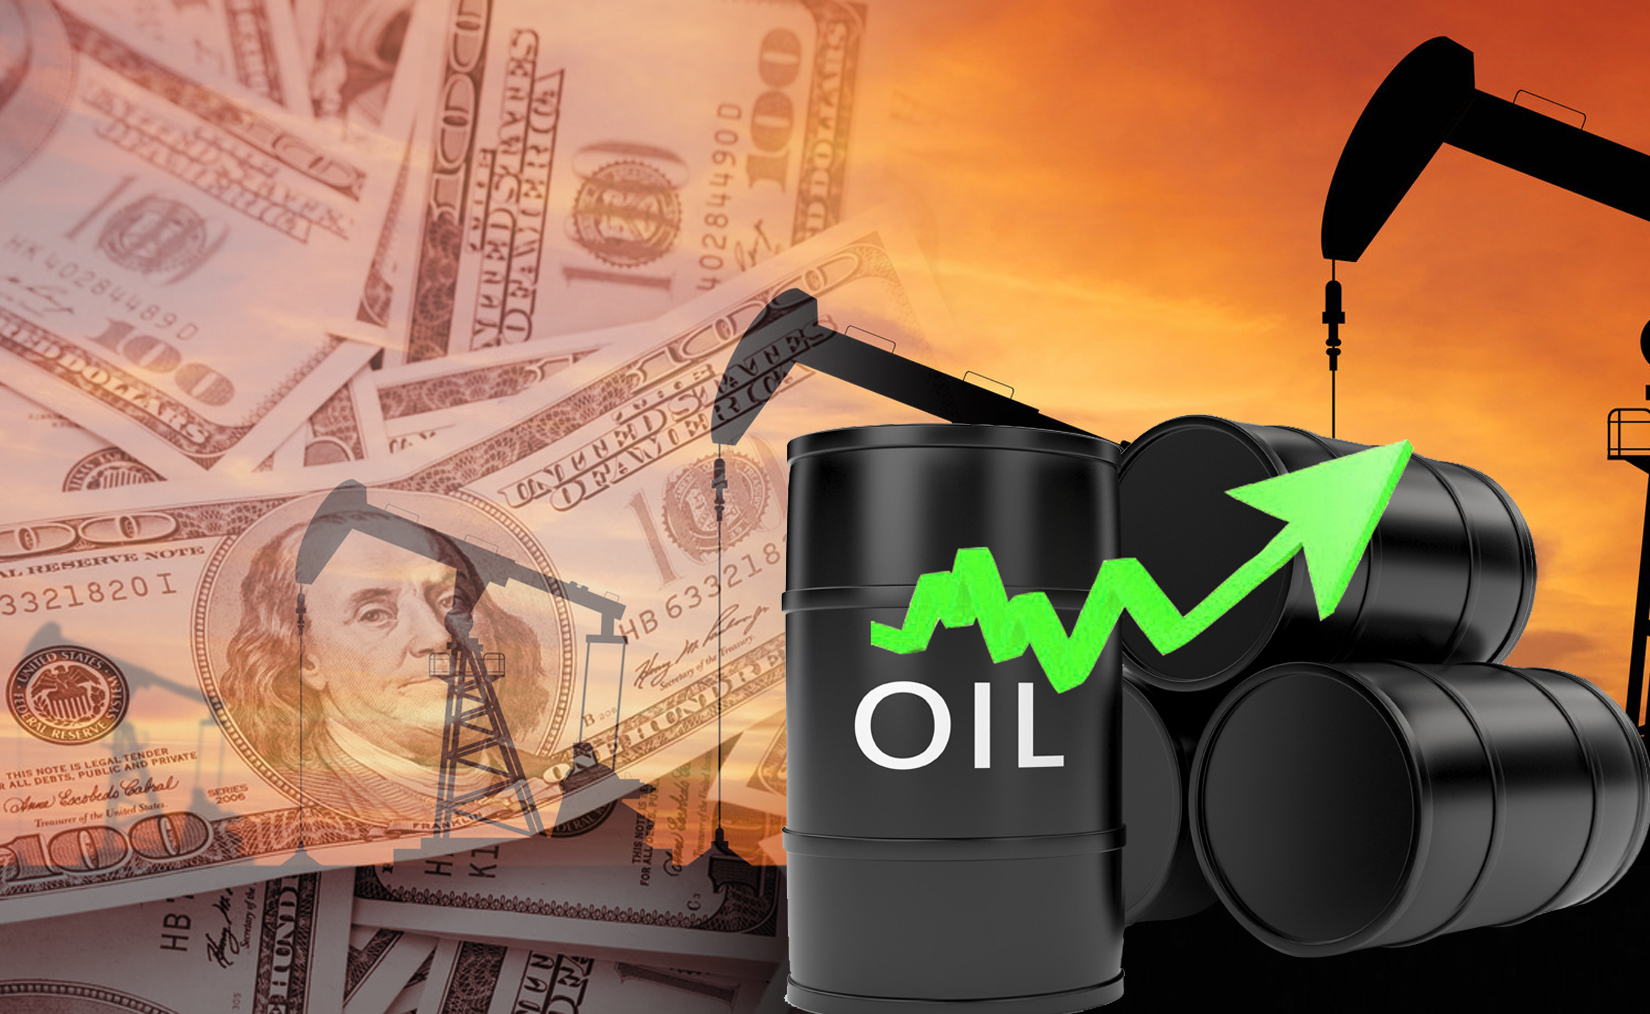 Kuwait crude oil up to USD 101.45 pb - KPC                                                                                                                                                                                                                